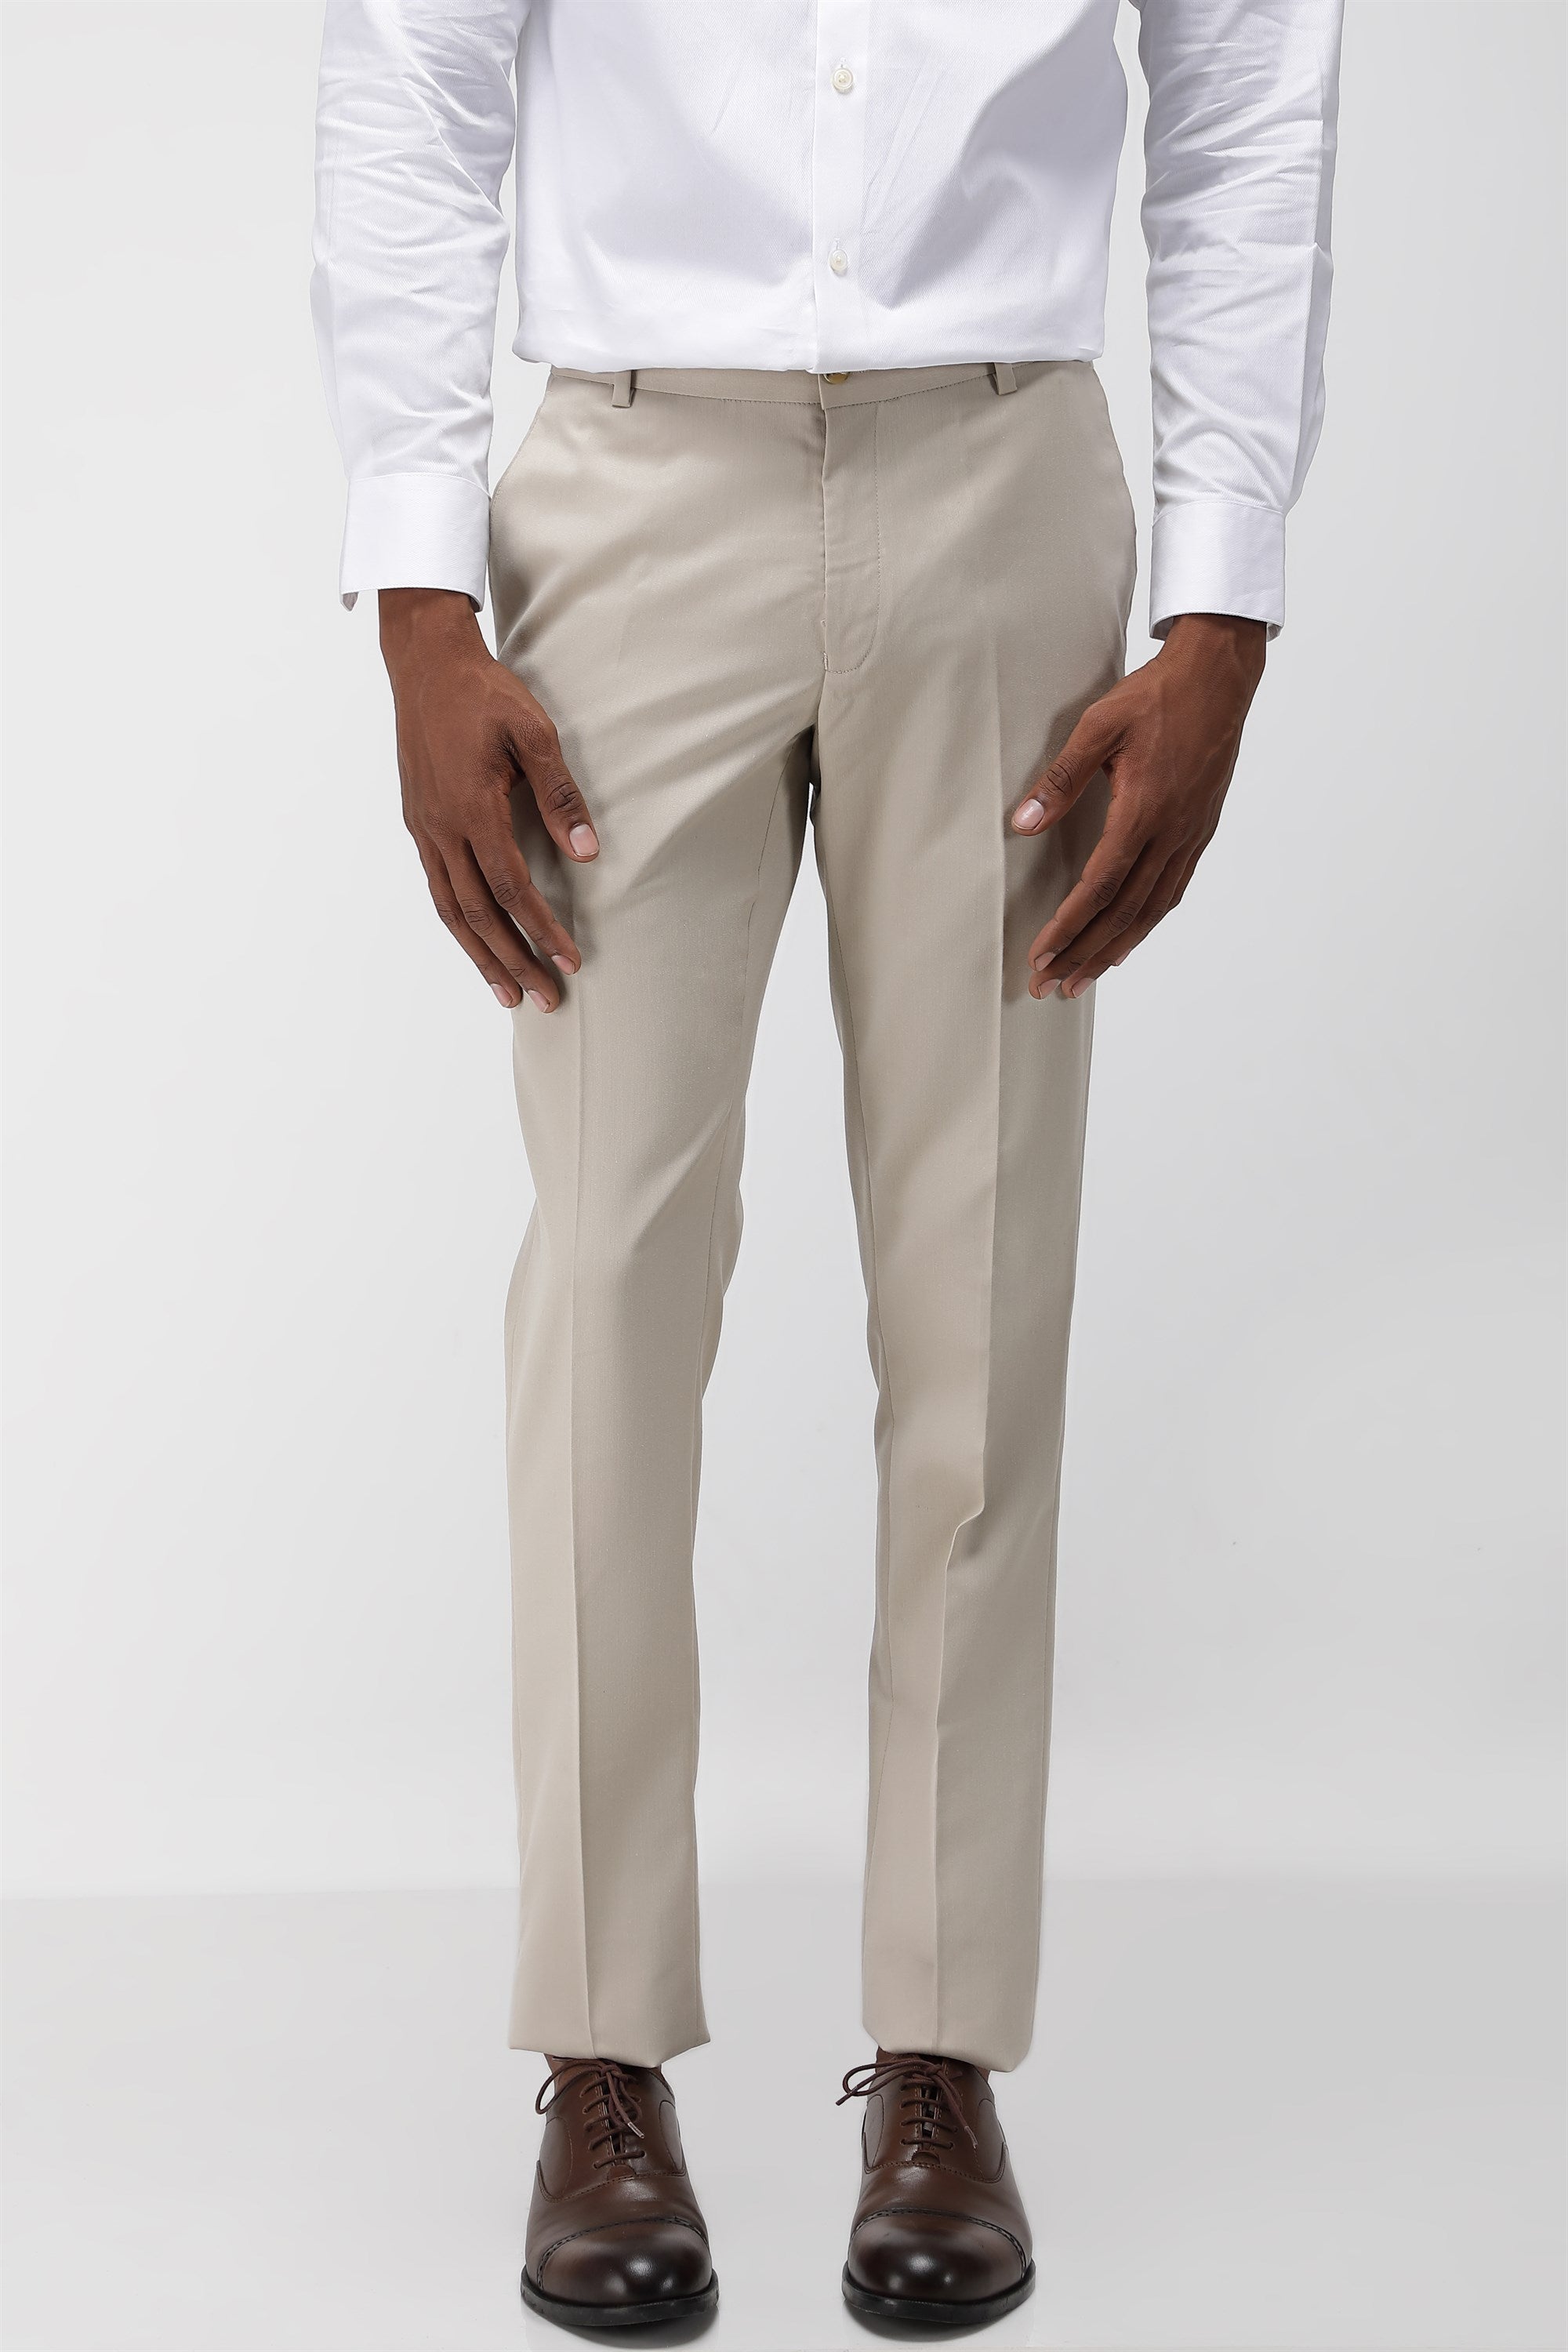 T the brand Mens Formal Flat Front Crease Trouser - Khaki